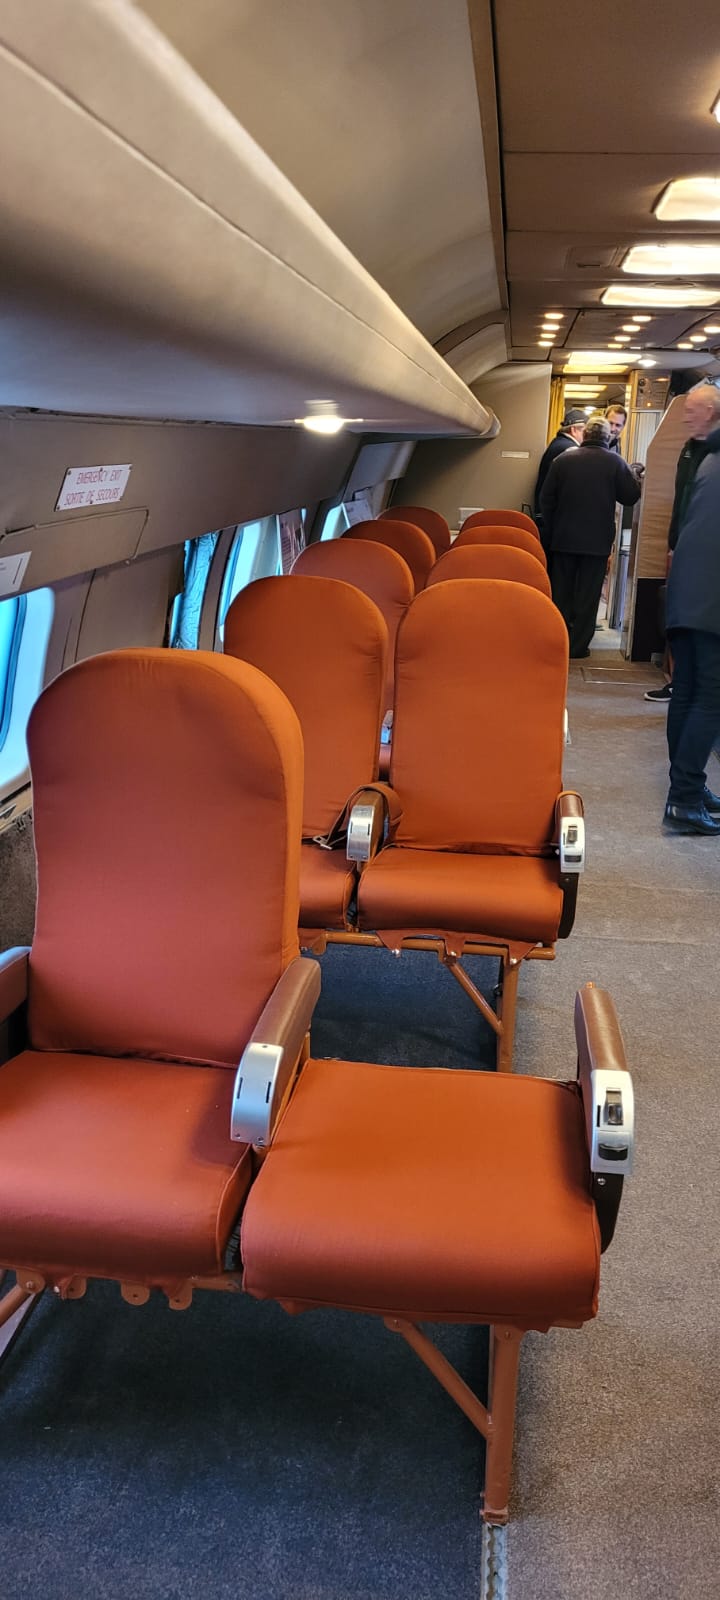 Passenger seats being installed